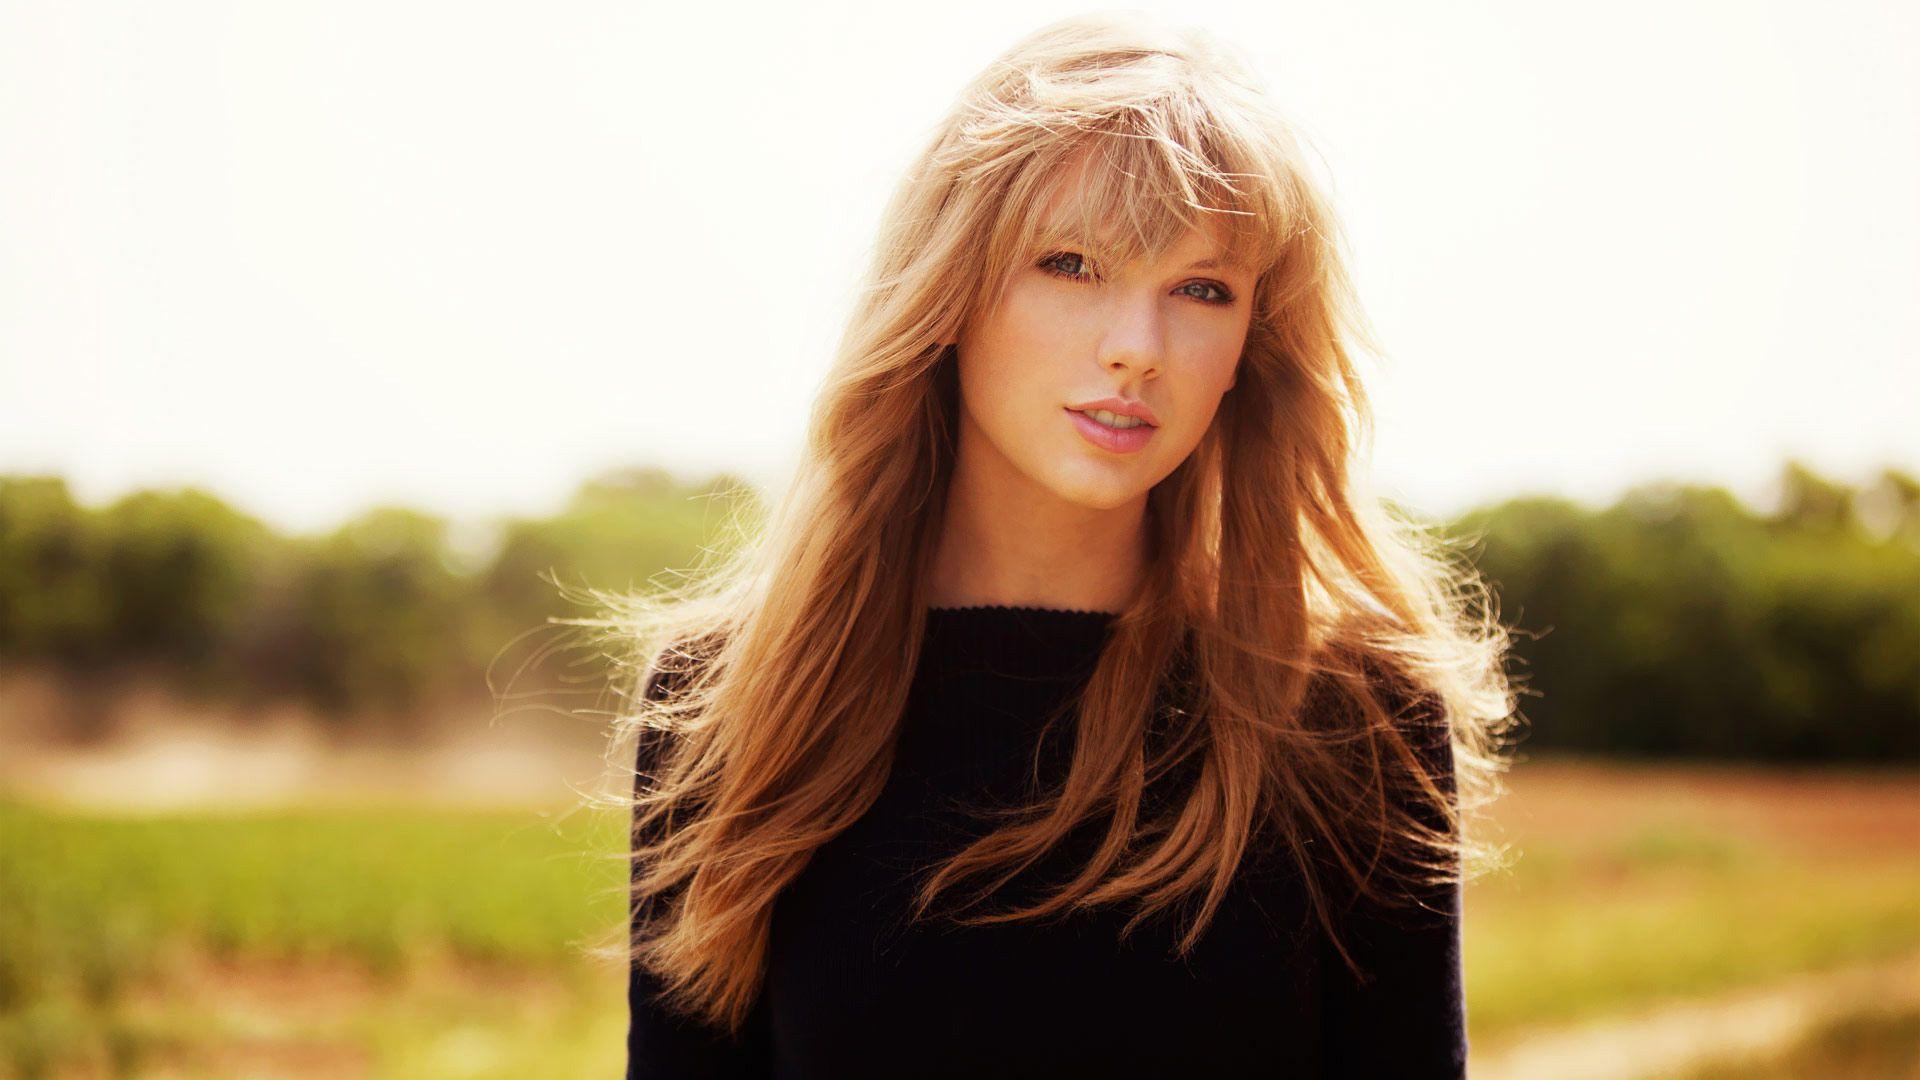 Gallery For: Taylor Swift Wallpaper, Taylor Swift Wallpaper, Top